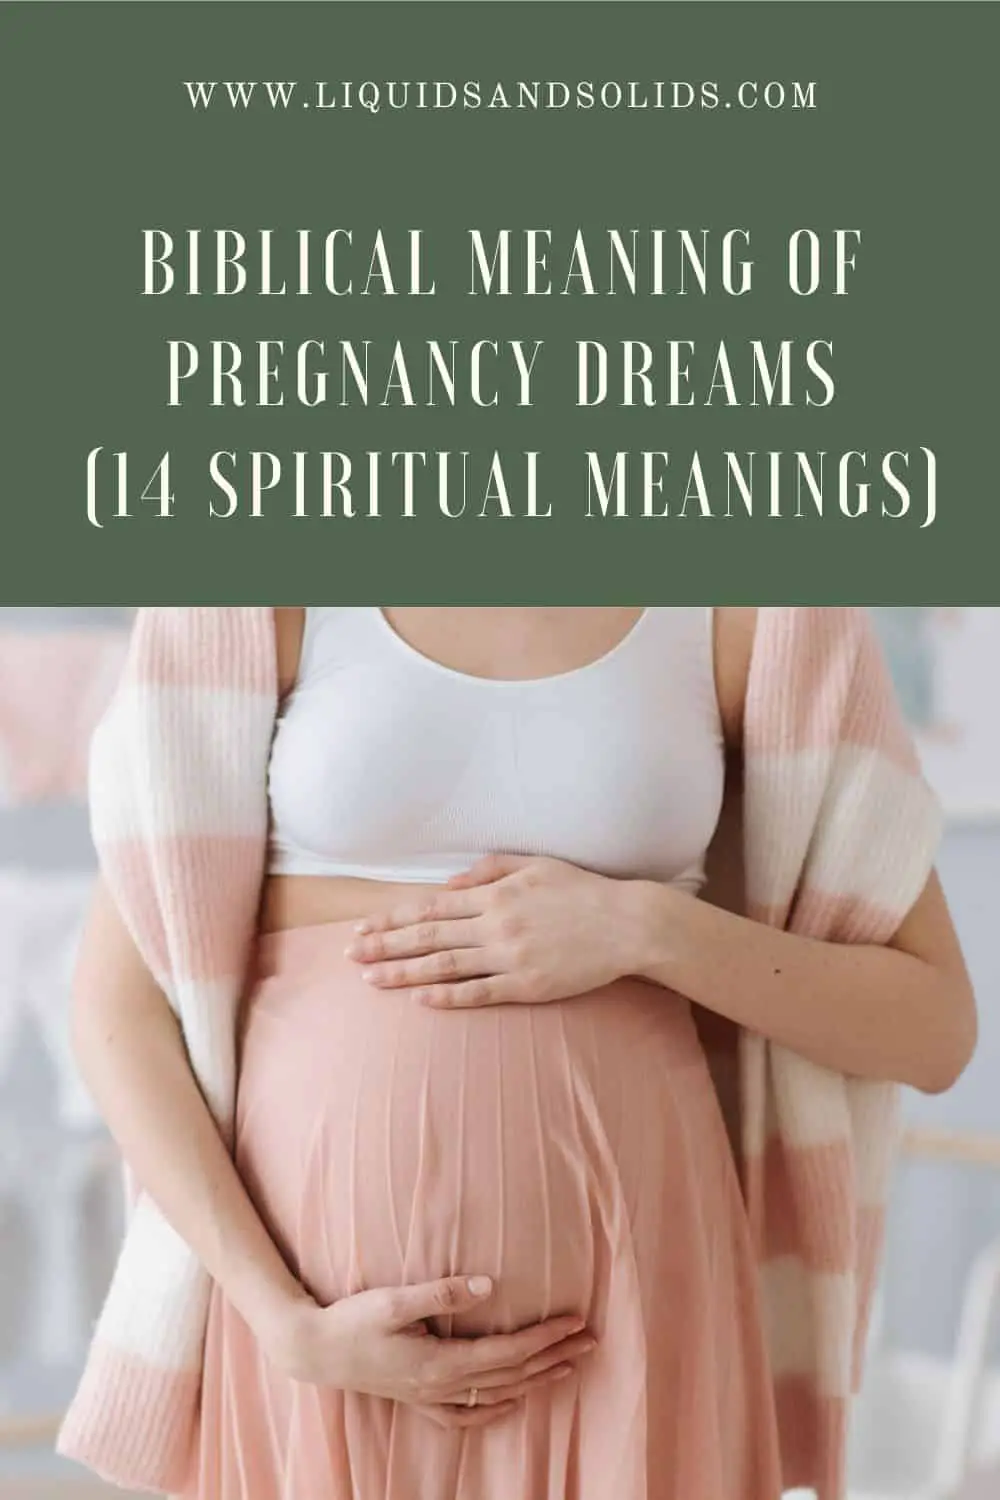 Precautions For Interpreting Pregnancy Dreams